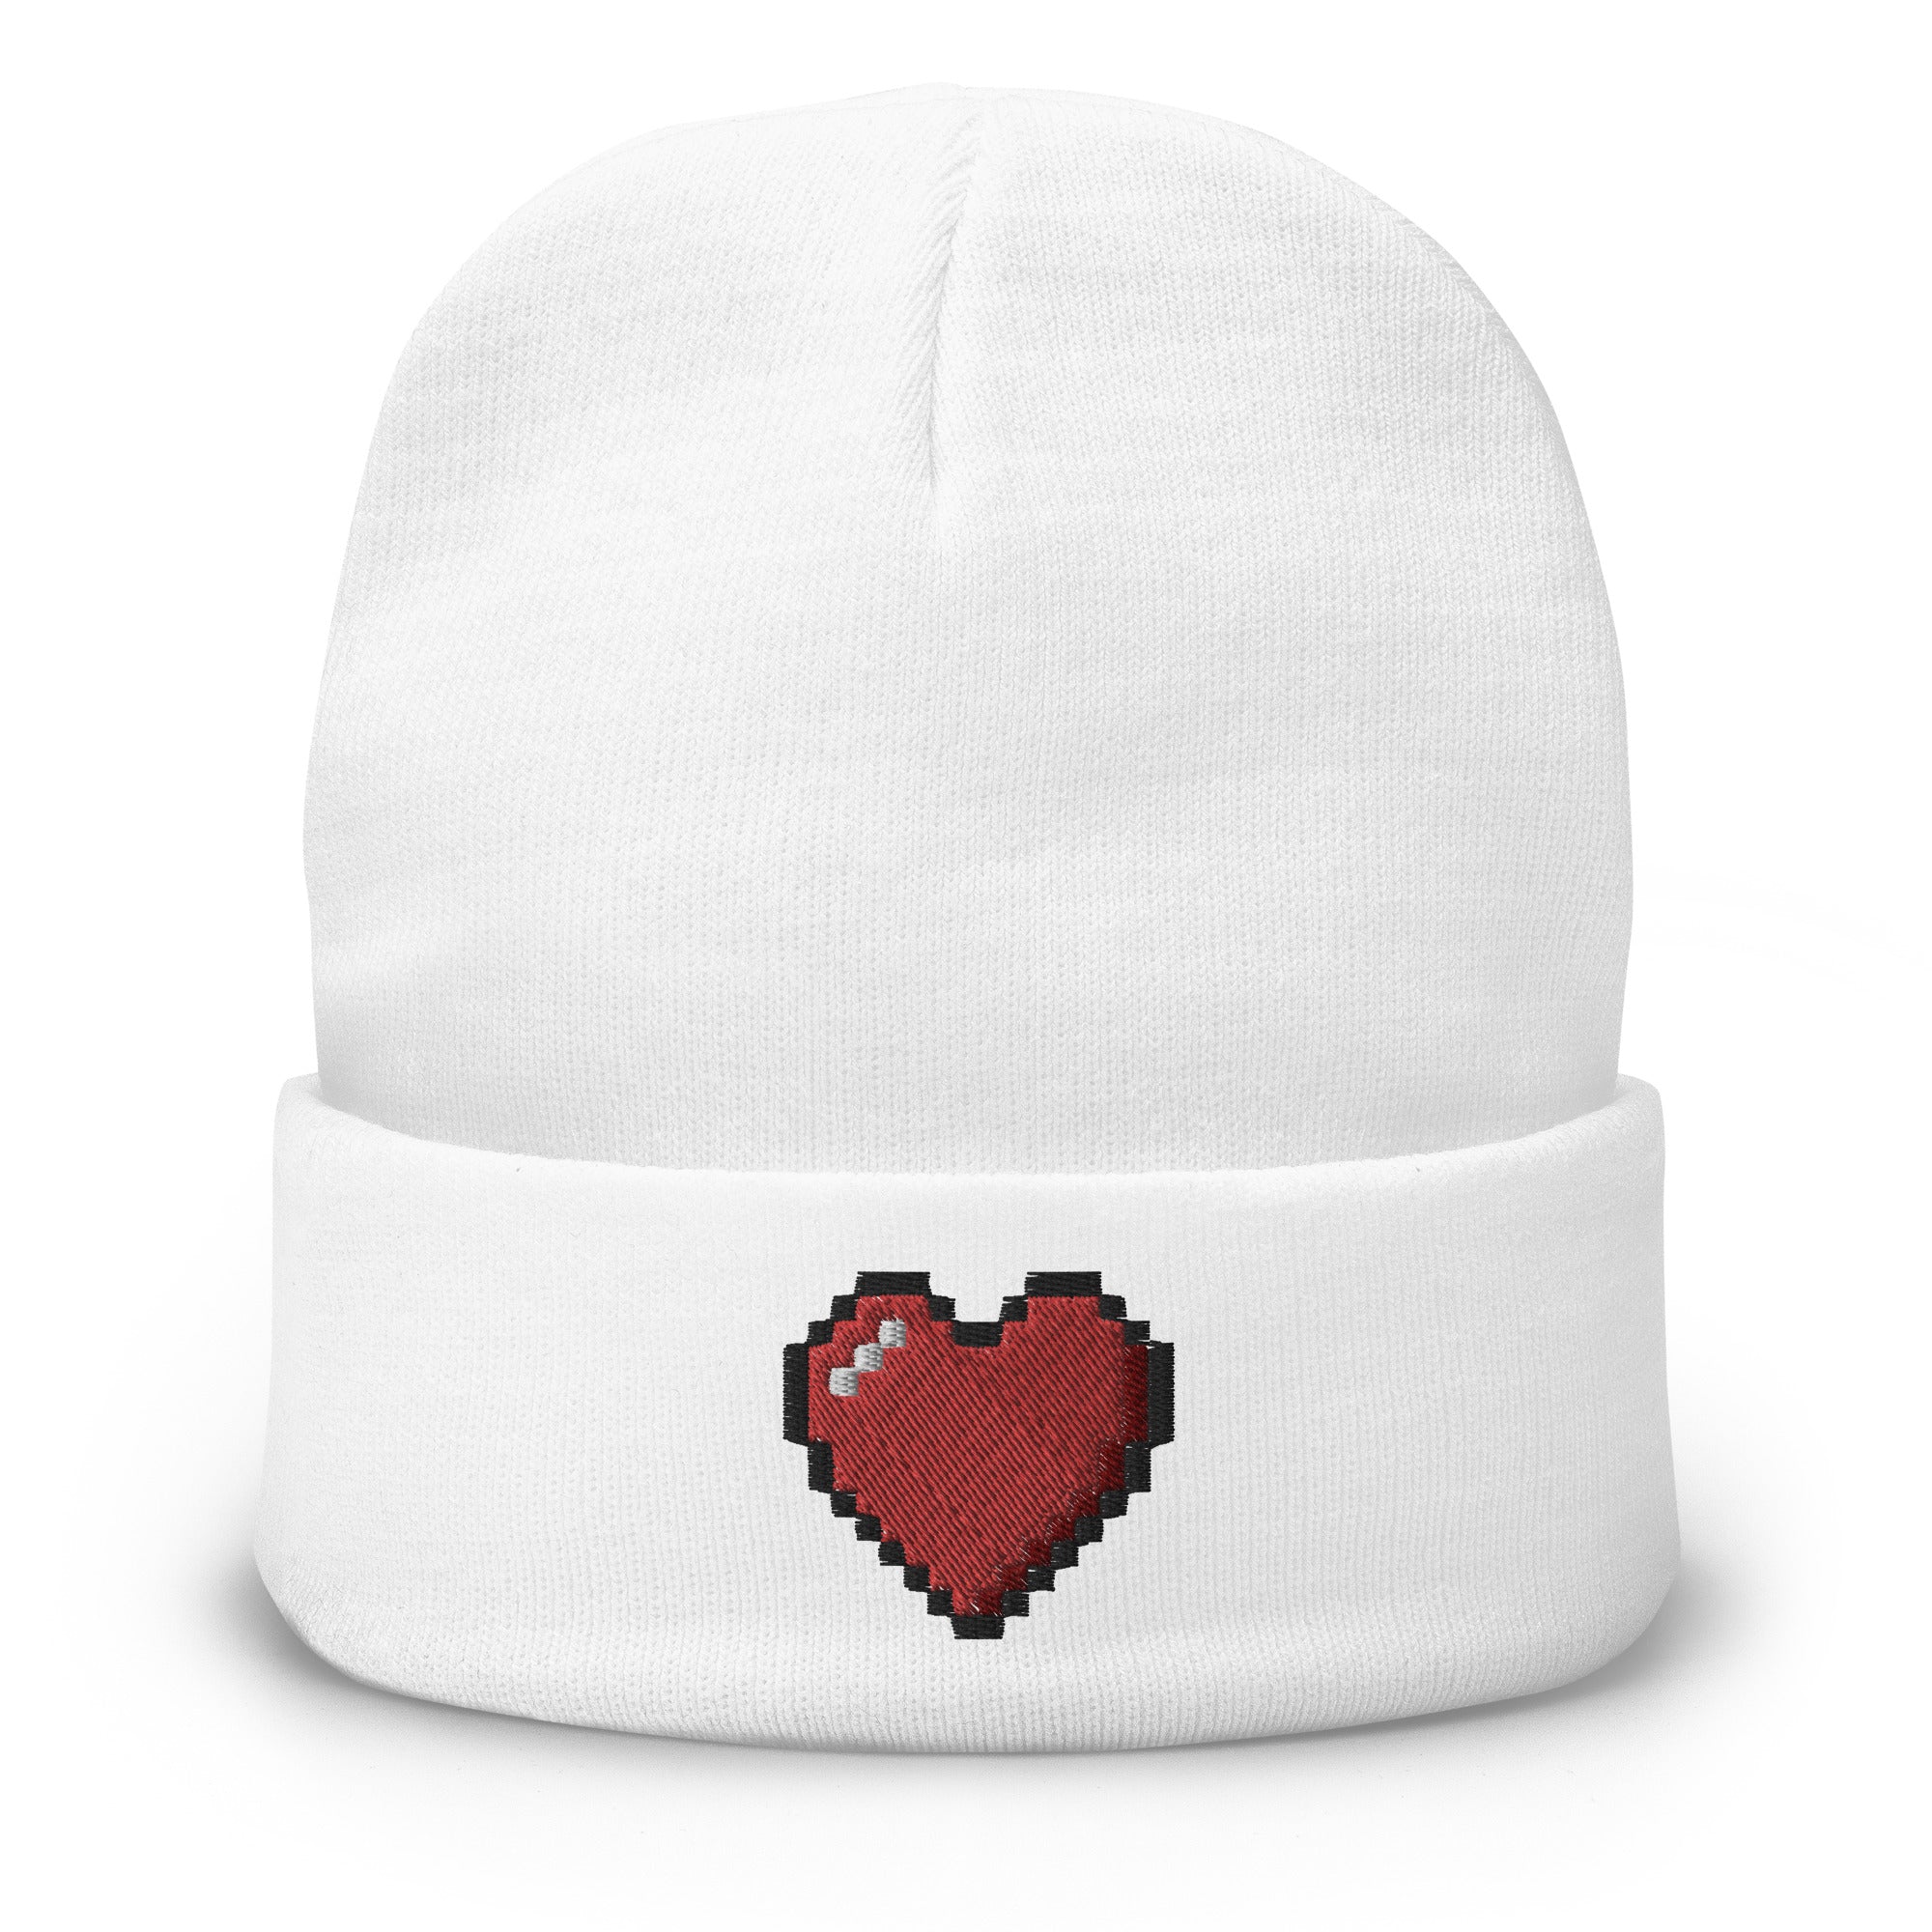 Retro 8 Bit Video Game Pixelated Heart Embroidered Cuff Beanie